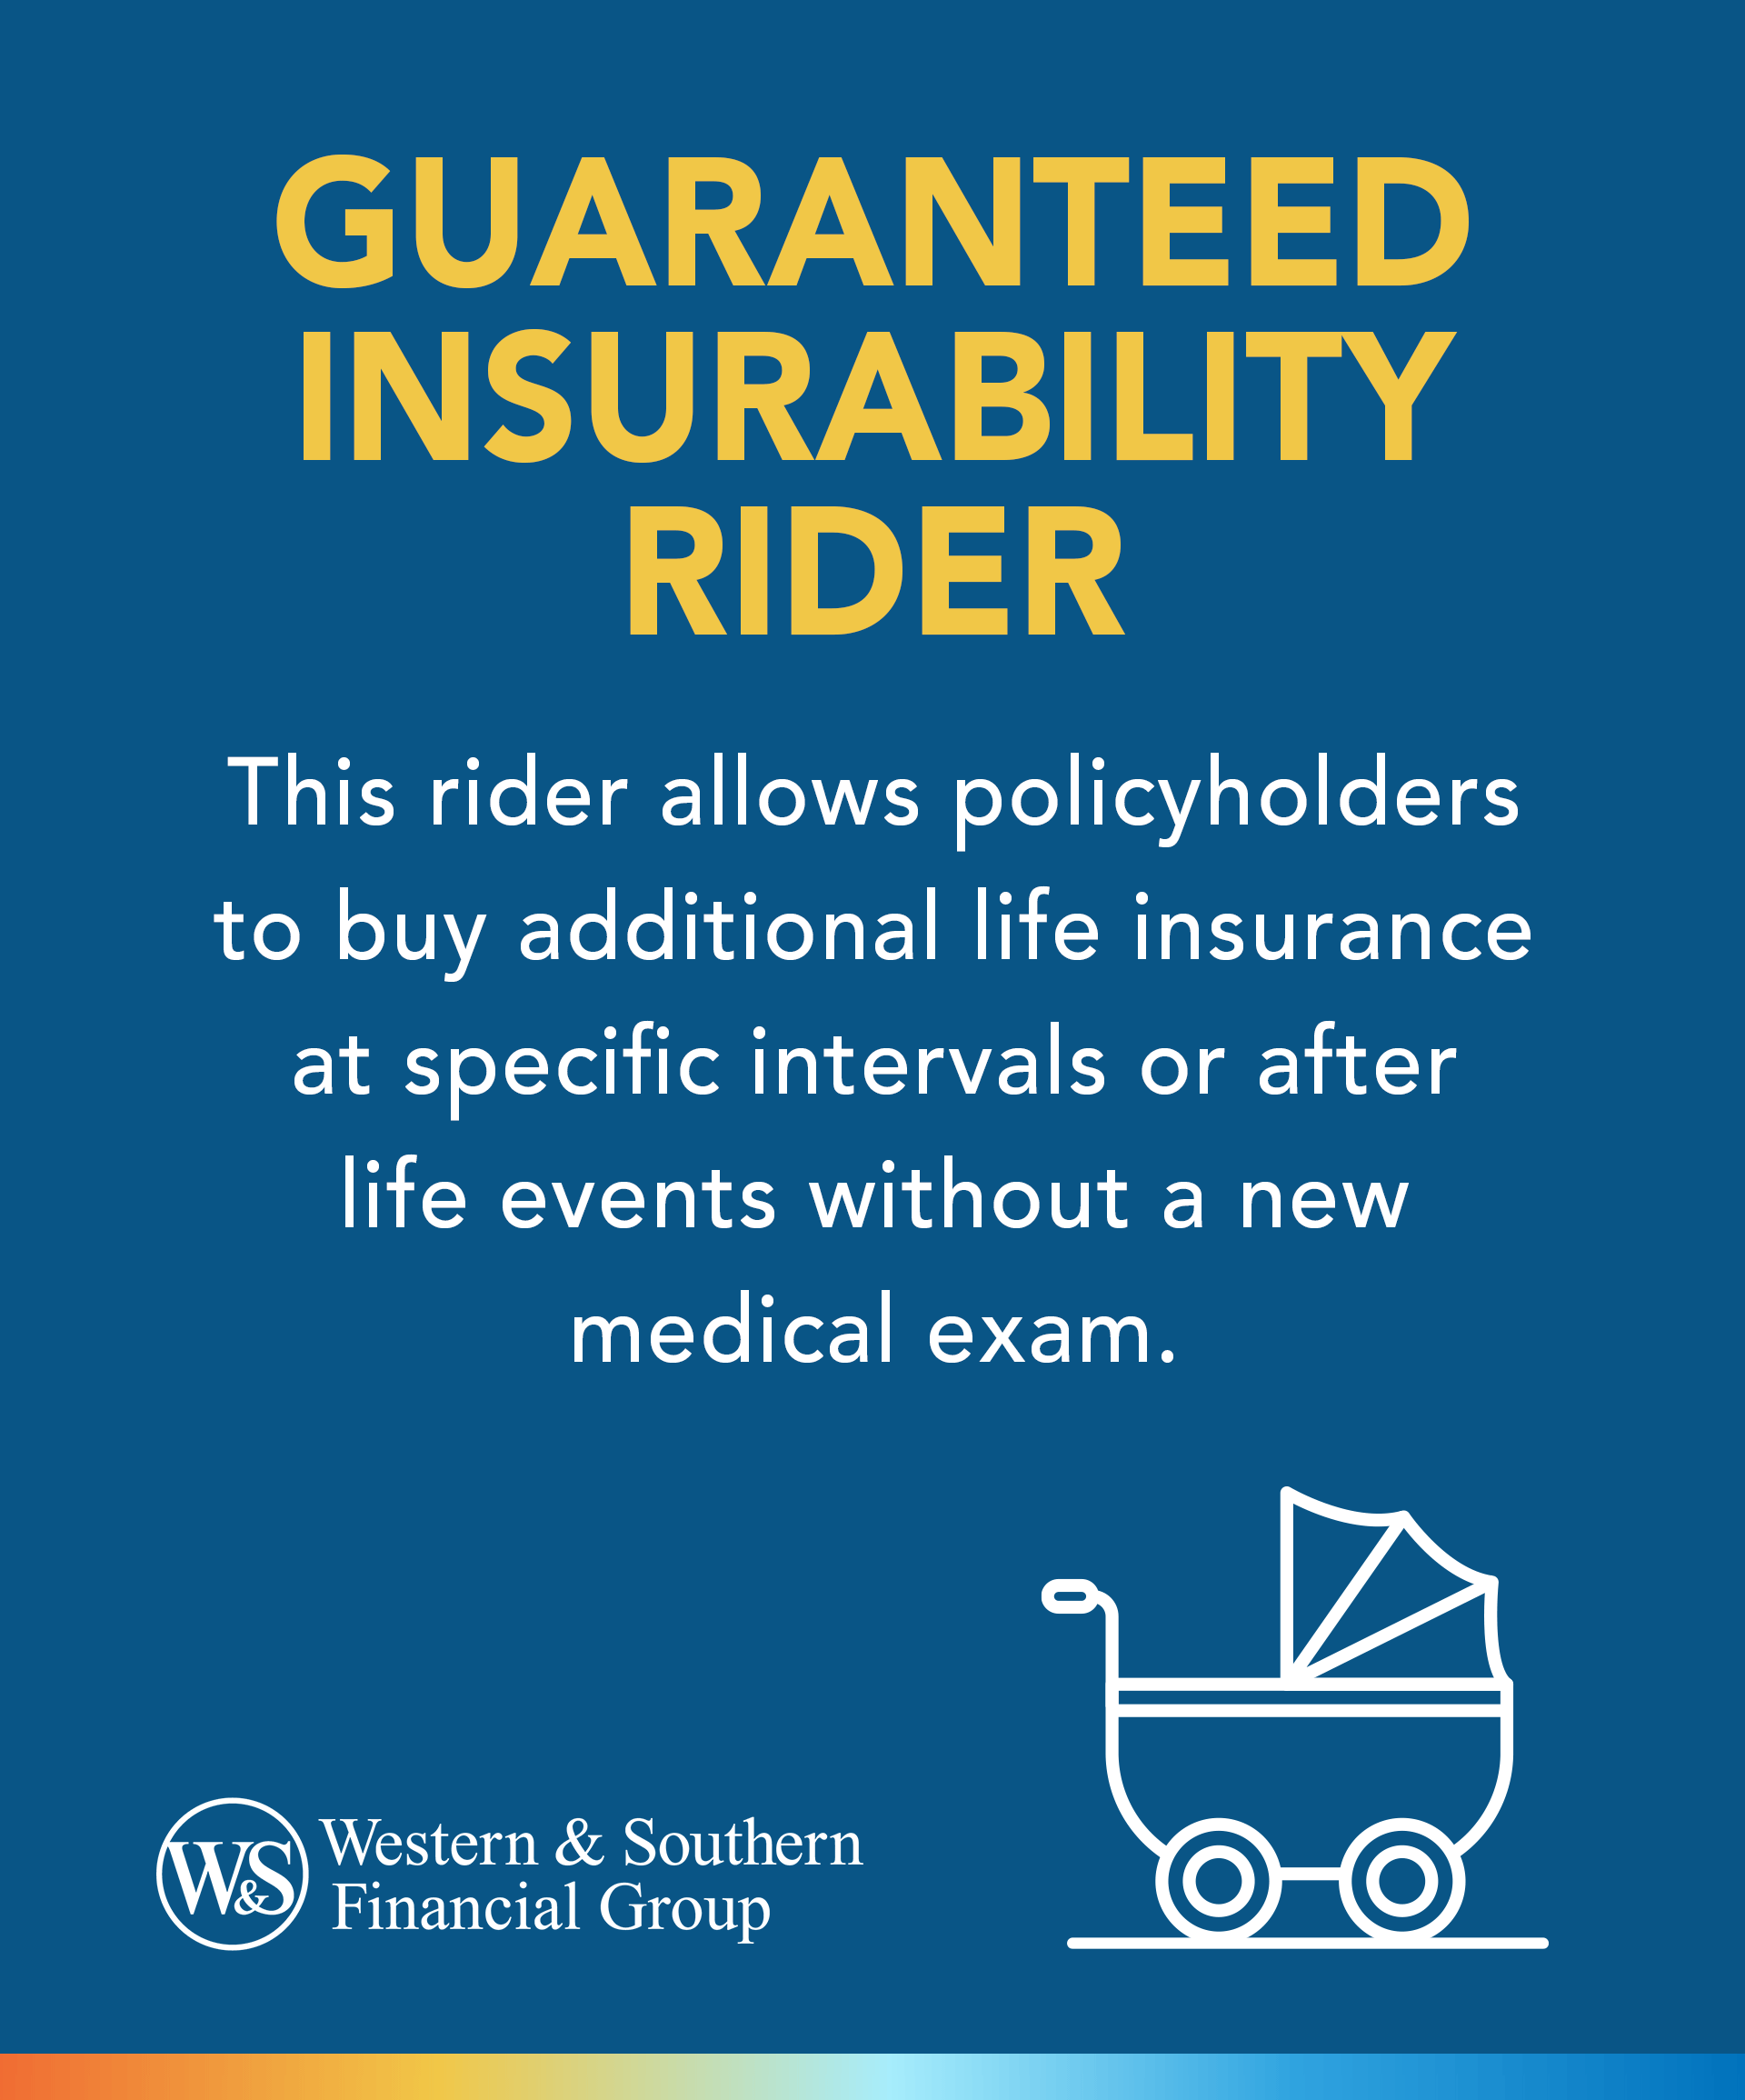 Guaranteed Insurability Rider Definition